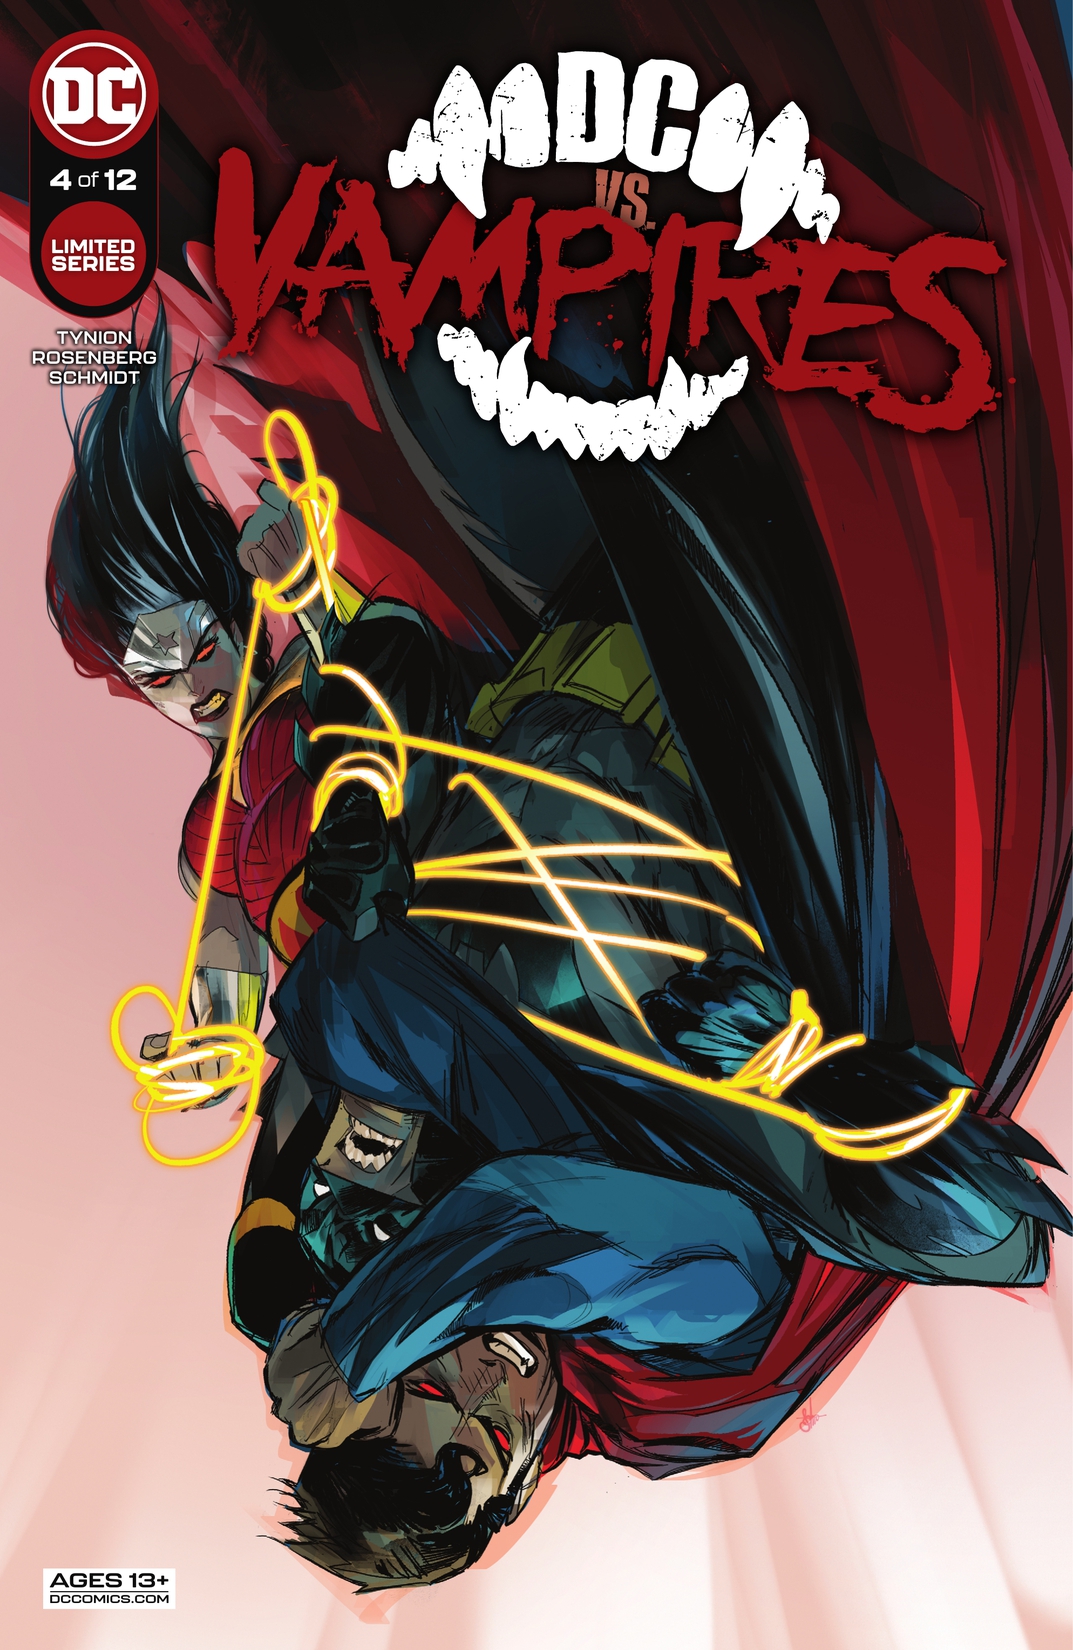 DC vs. Vampires #4 preview images